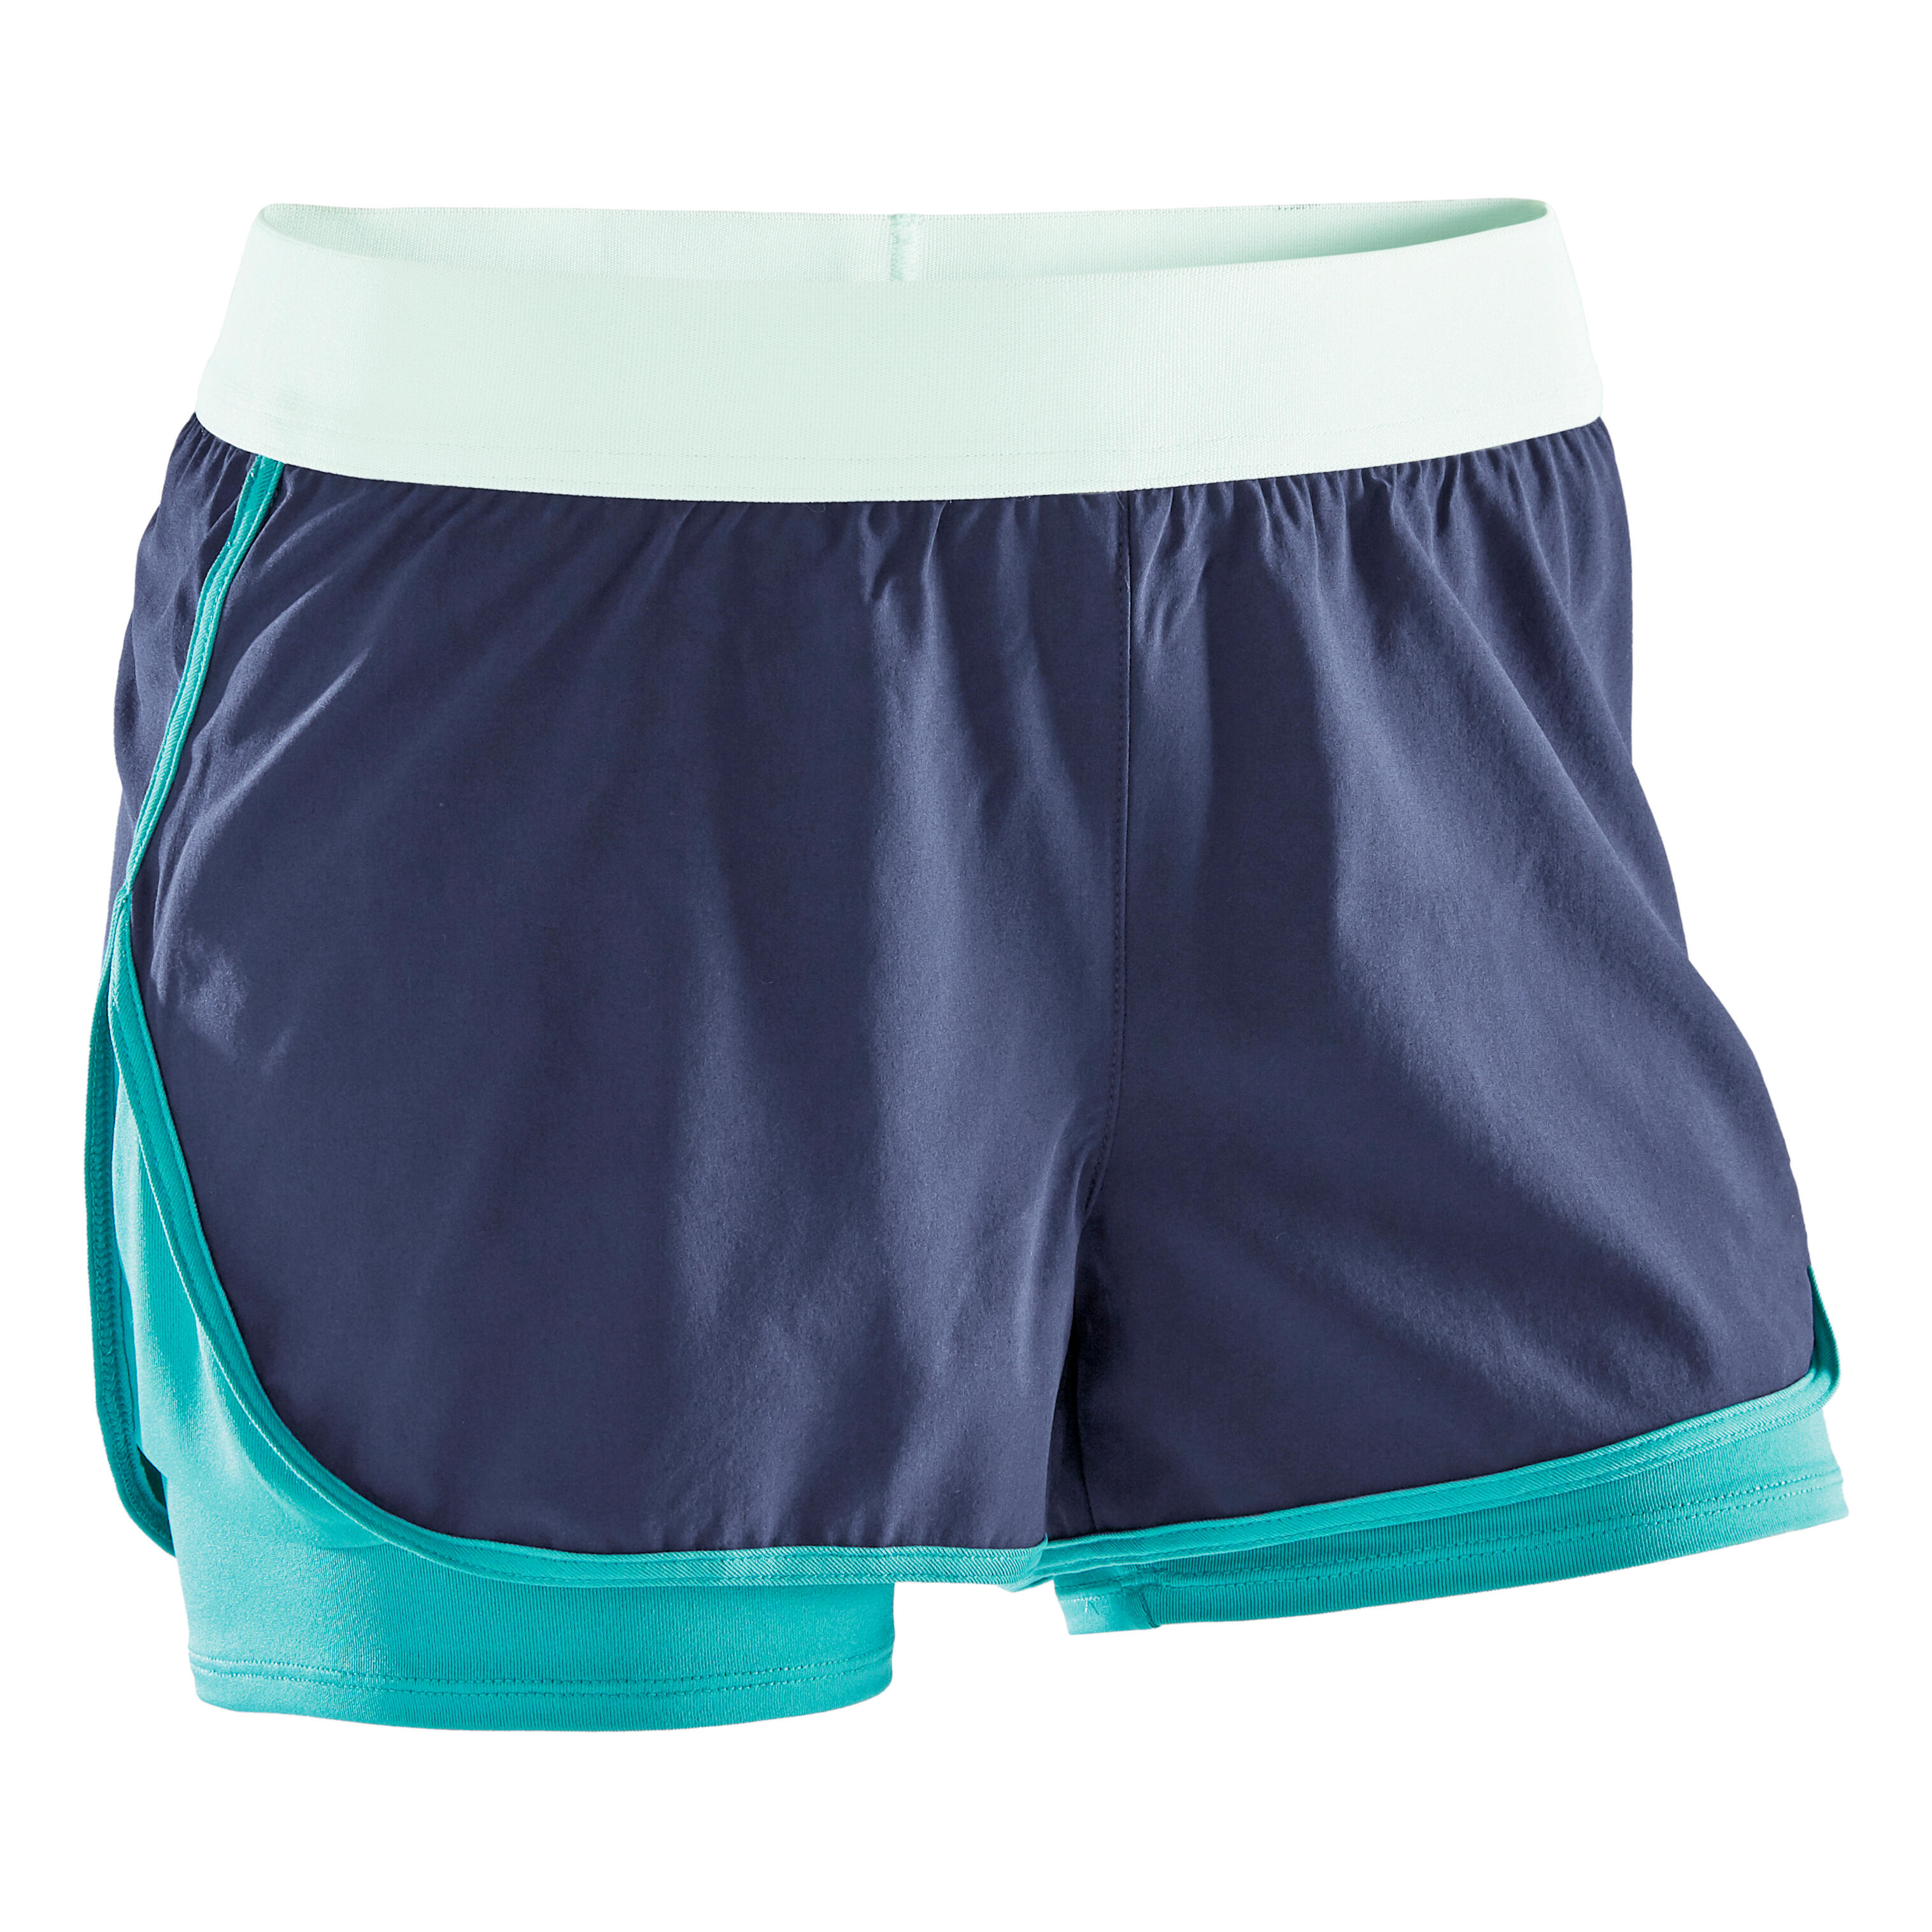 Girls' 2-in-1 Shorts - Blue Green DOMYOS